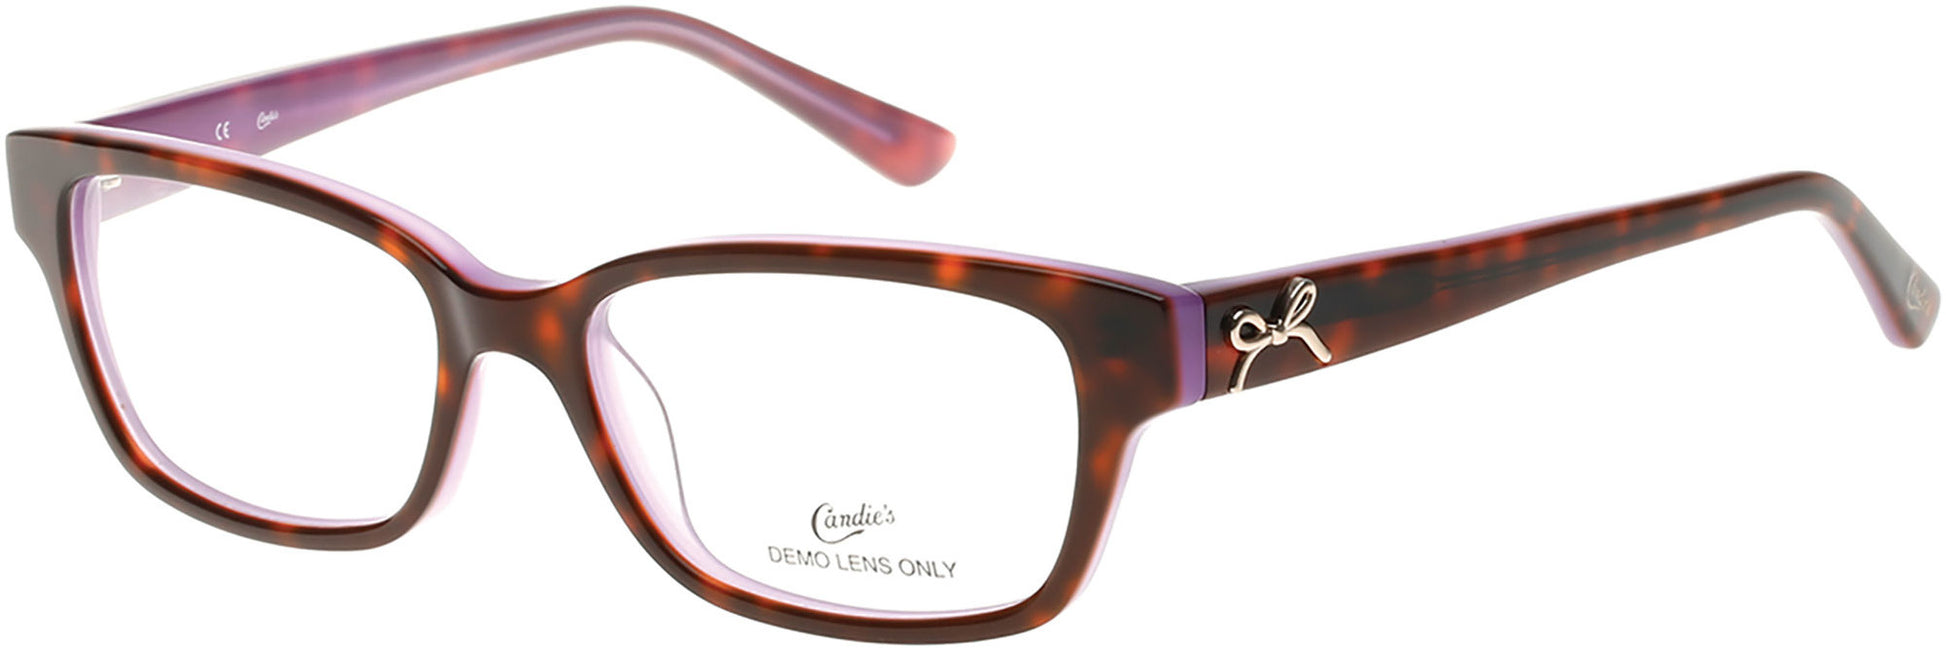 Candies CAA313 Eyeglasses S30-S30 - Scale